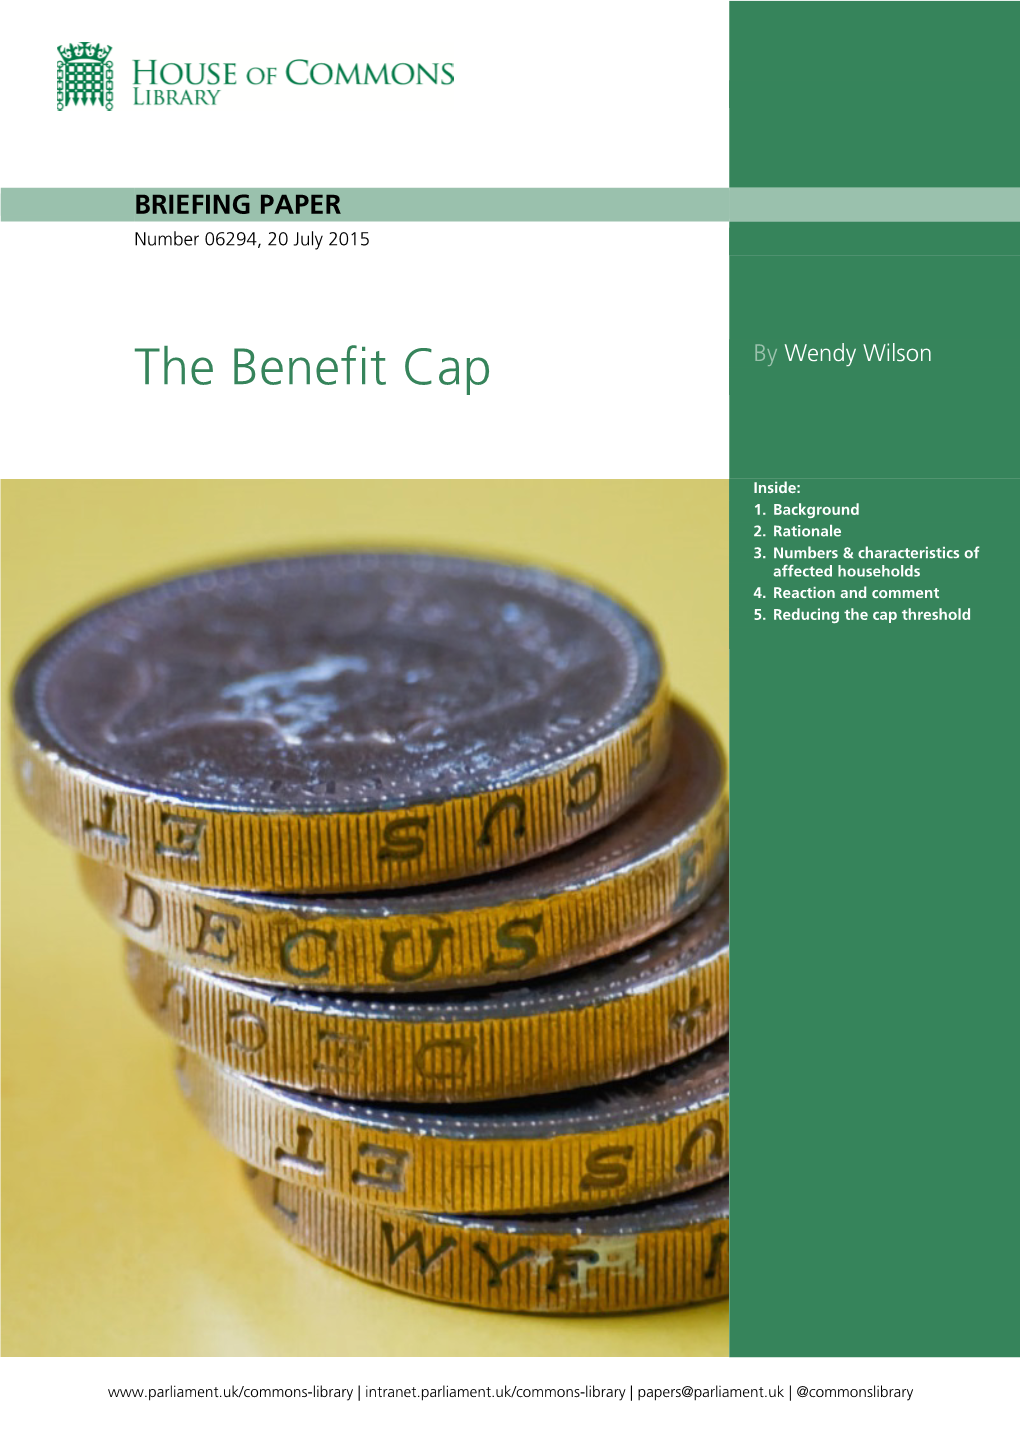 The Benefit Cap